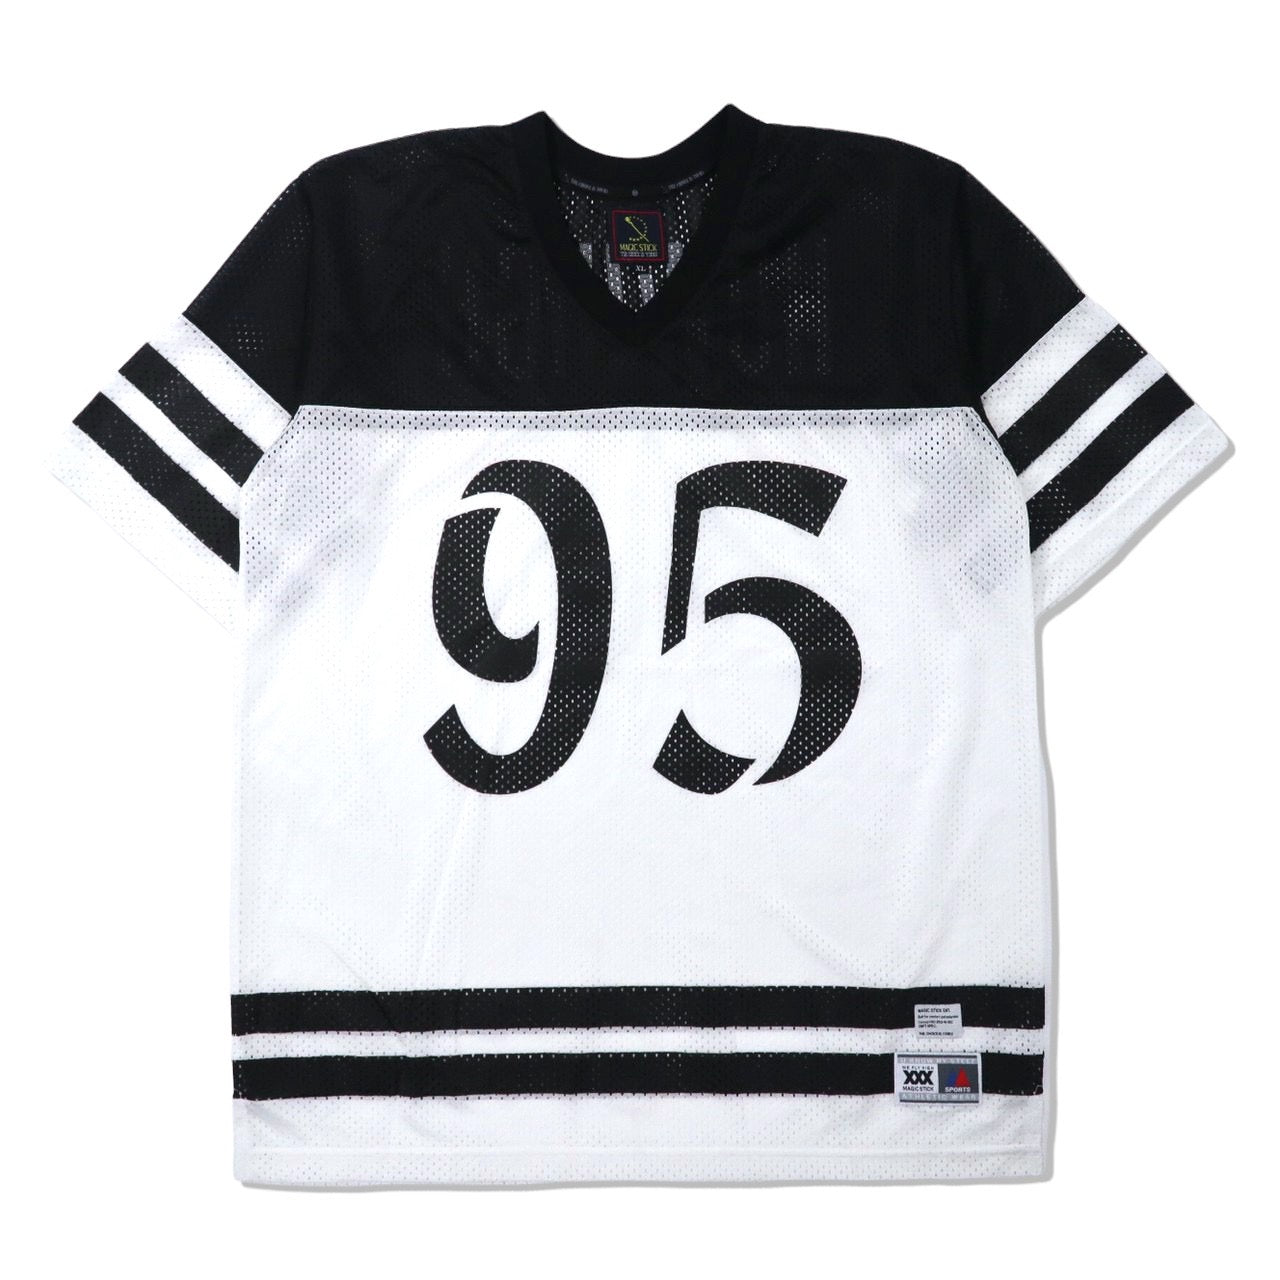 Magic Stick Game Shirt XL Black White Mesh Number – 日本然リトテ